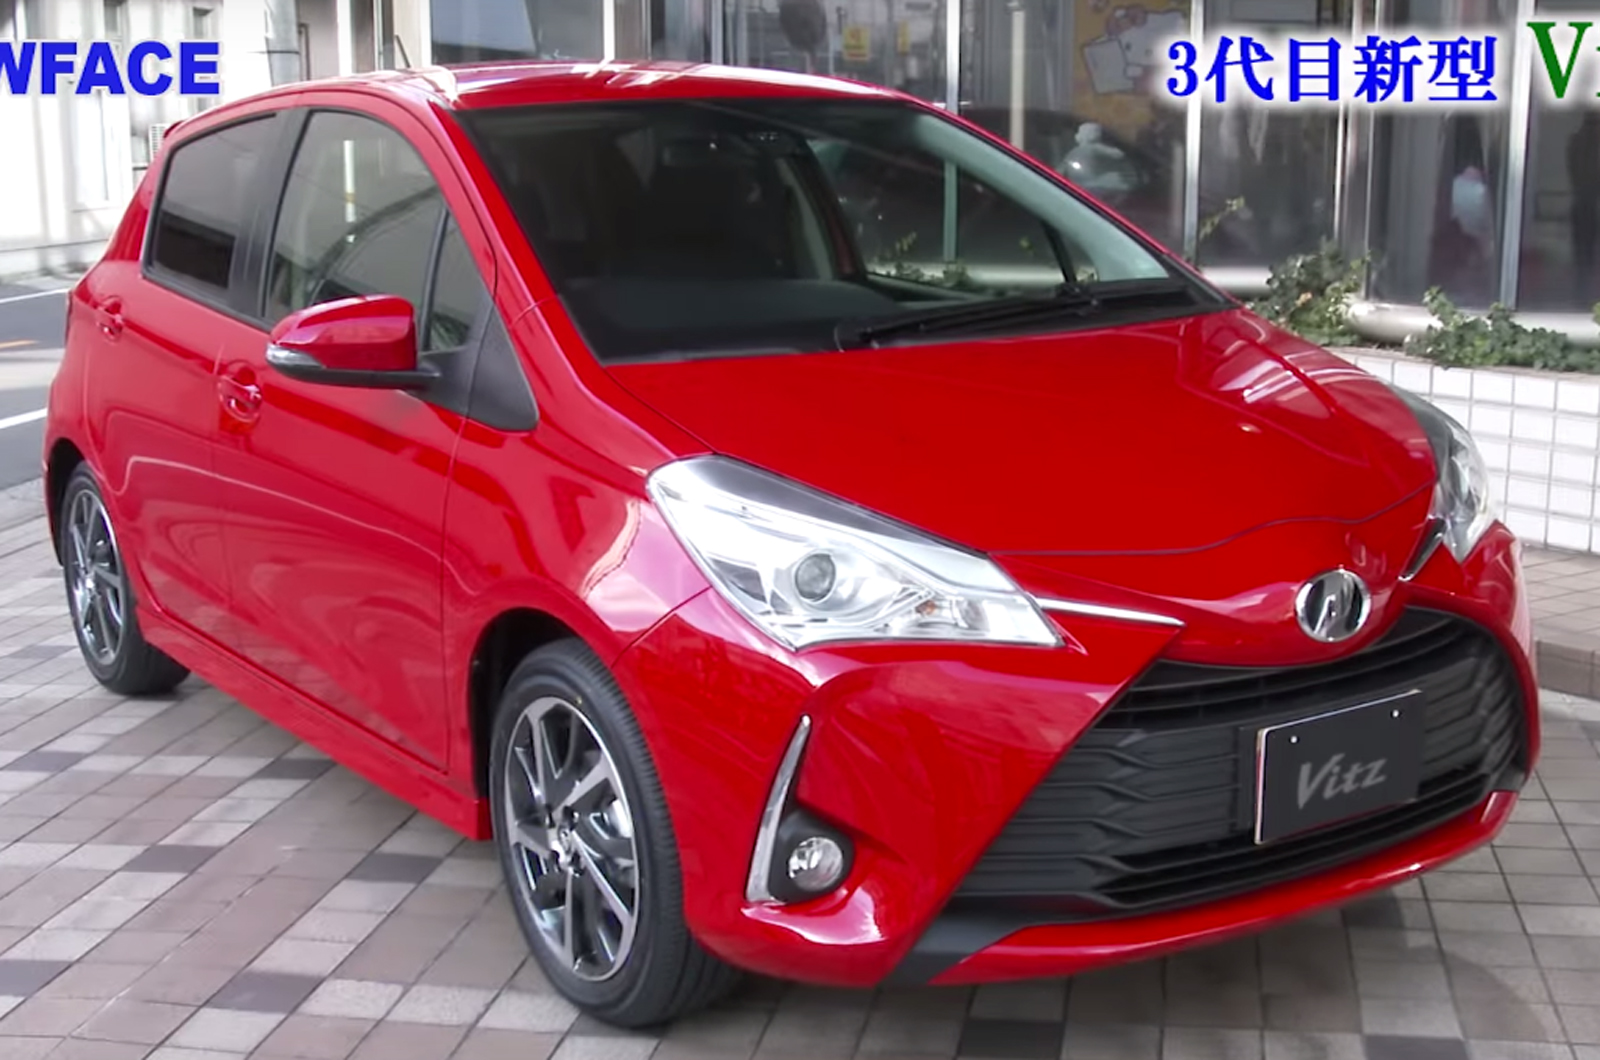 2017 Toyota Yaris revealed on video